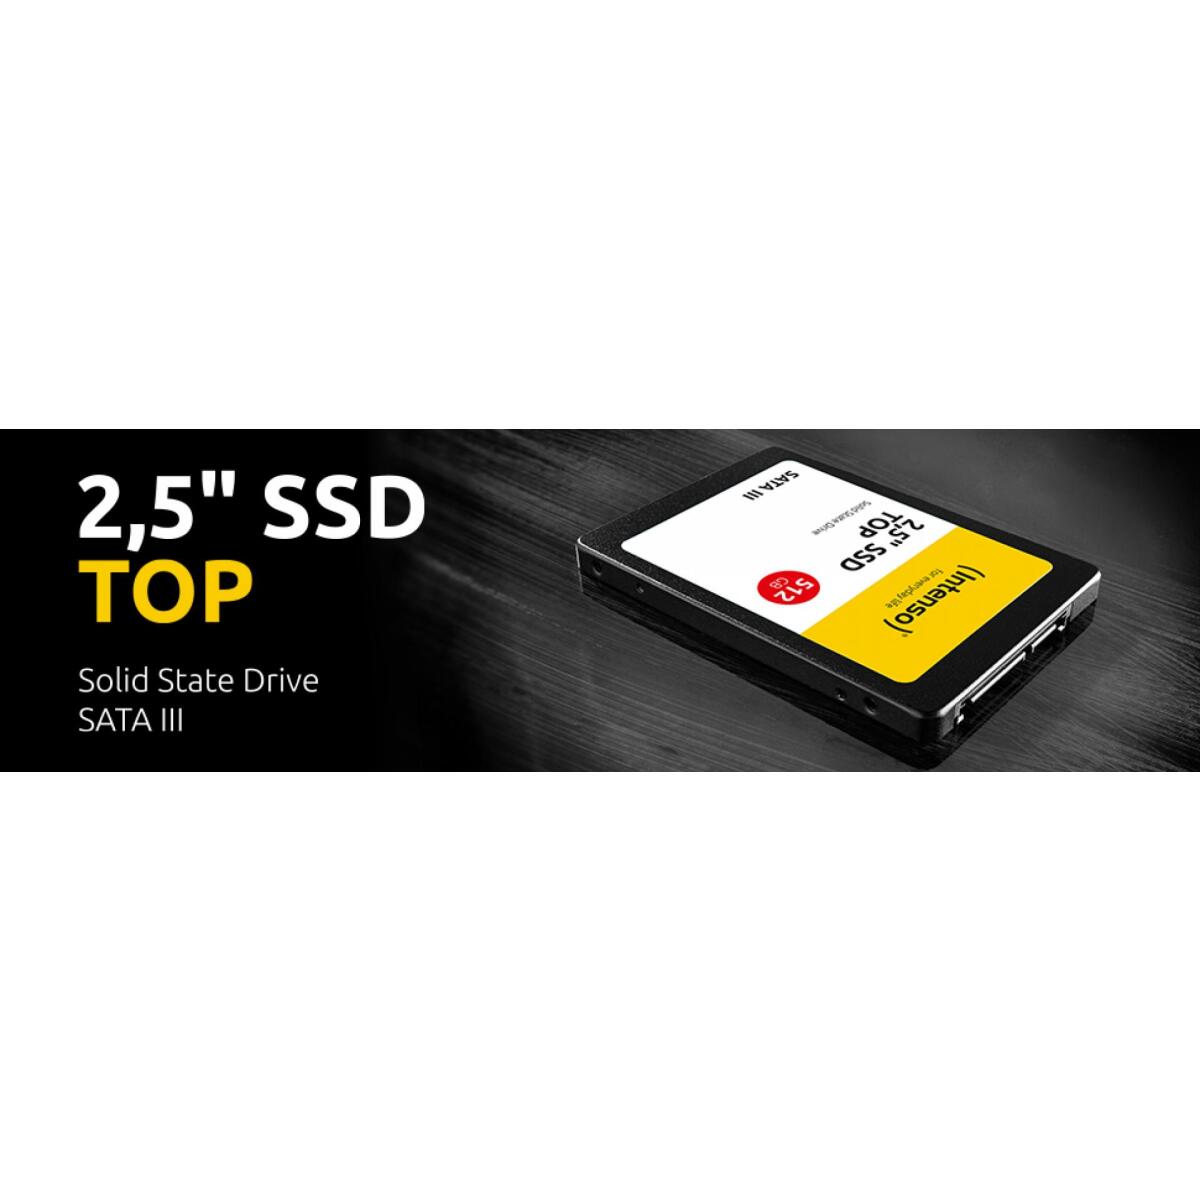 SSD Intenso 512GB TOP SATA3 40,16 intern 2,5\'\' OWL Computerhilfe - € Onlinesh